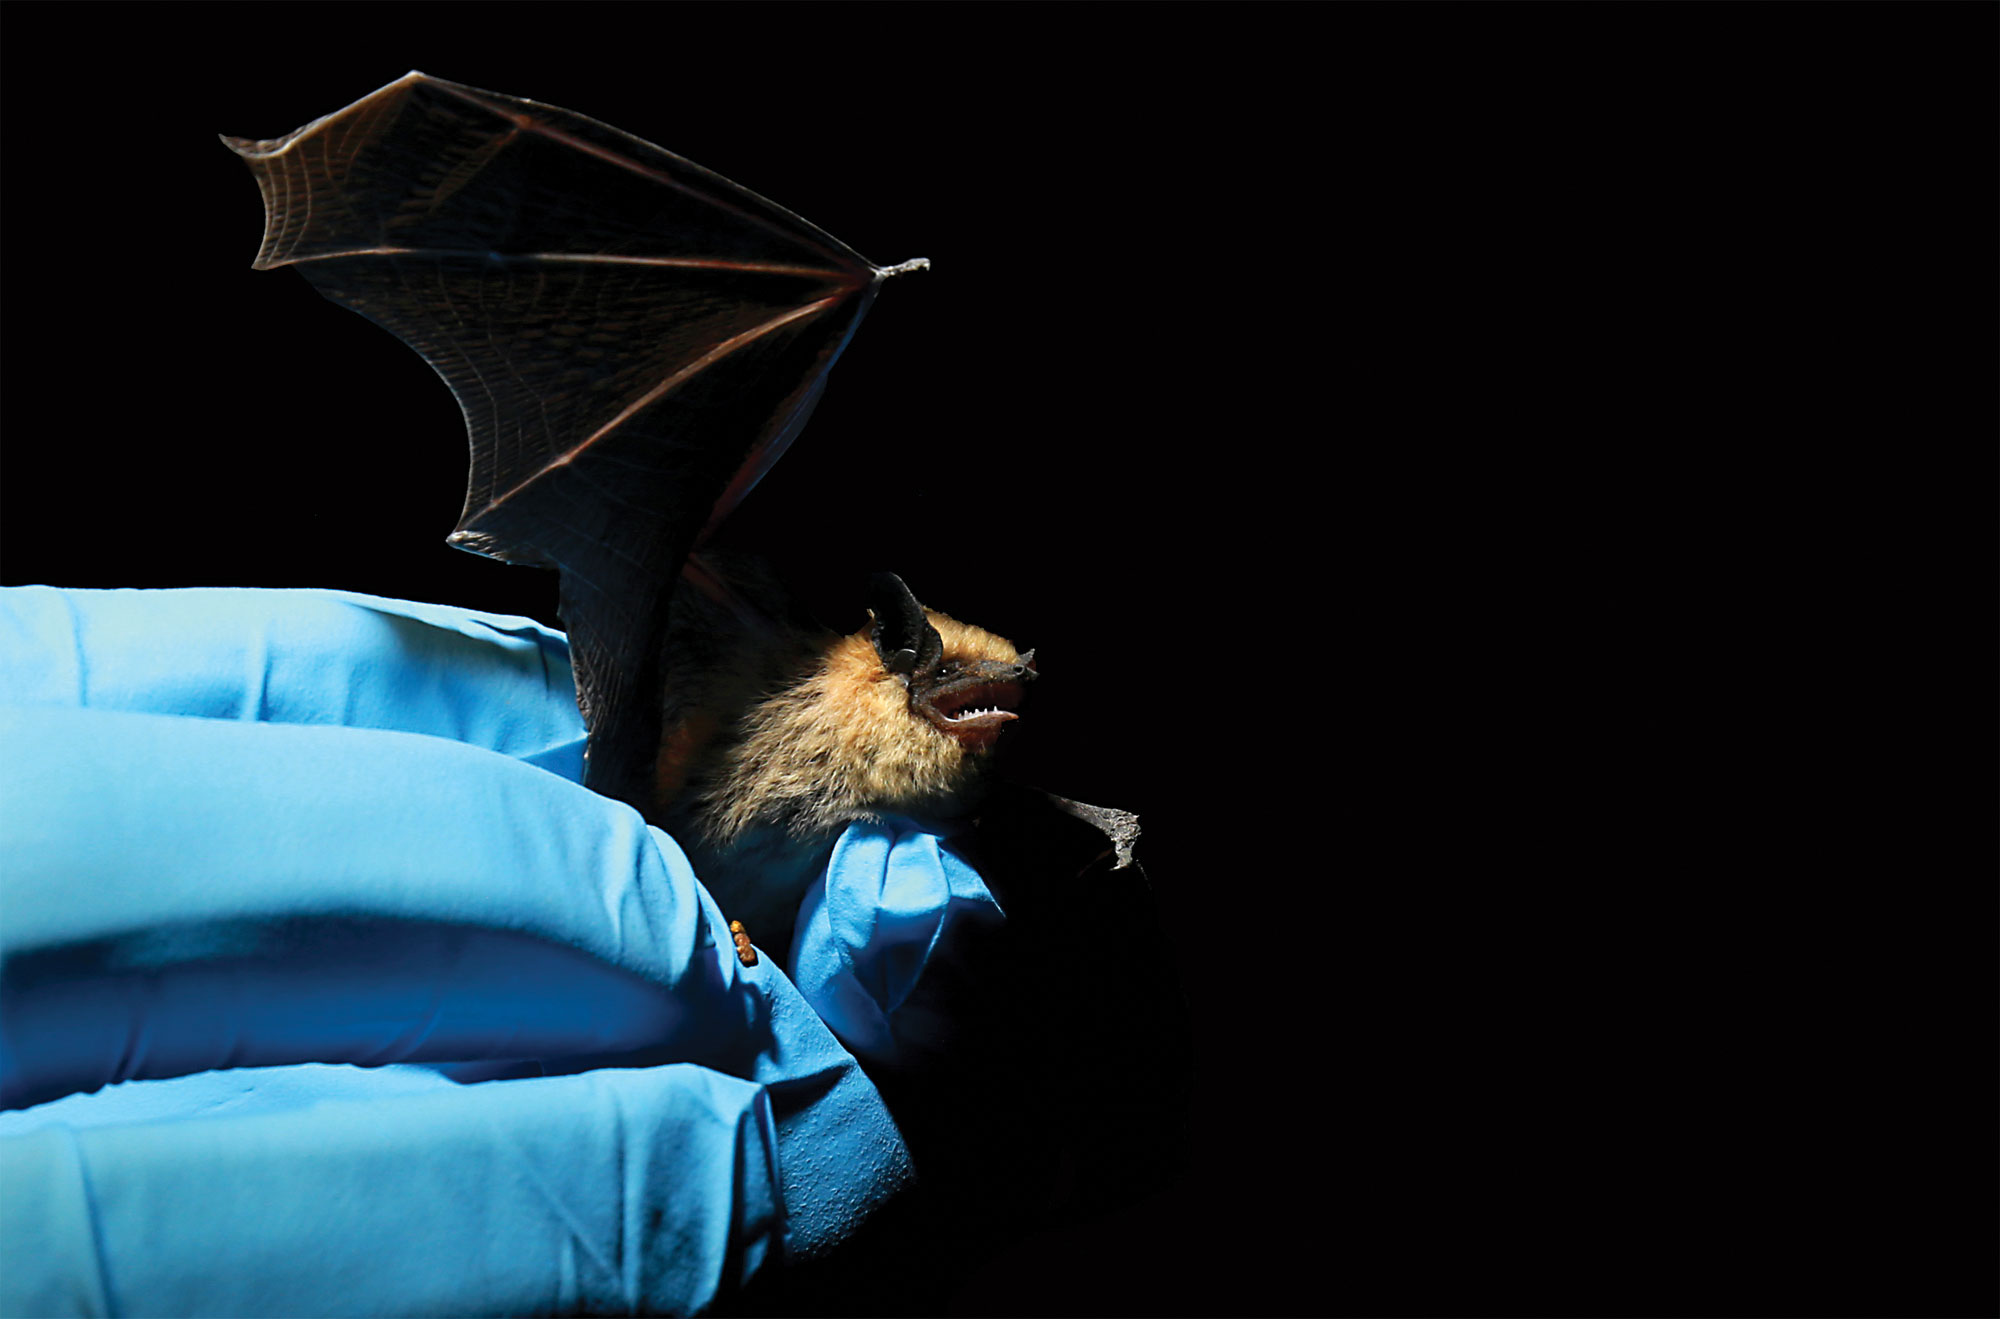 Community Bat Program says 'bats aren't scary' - BC News 